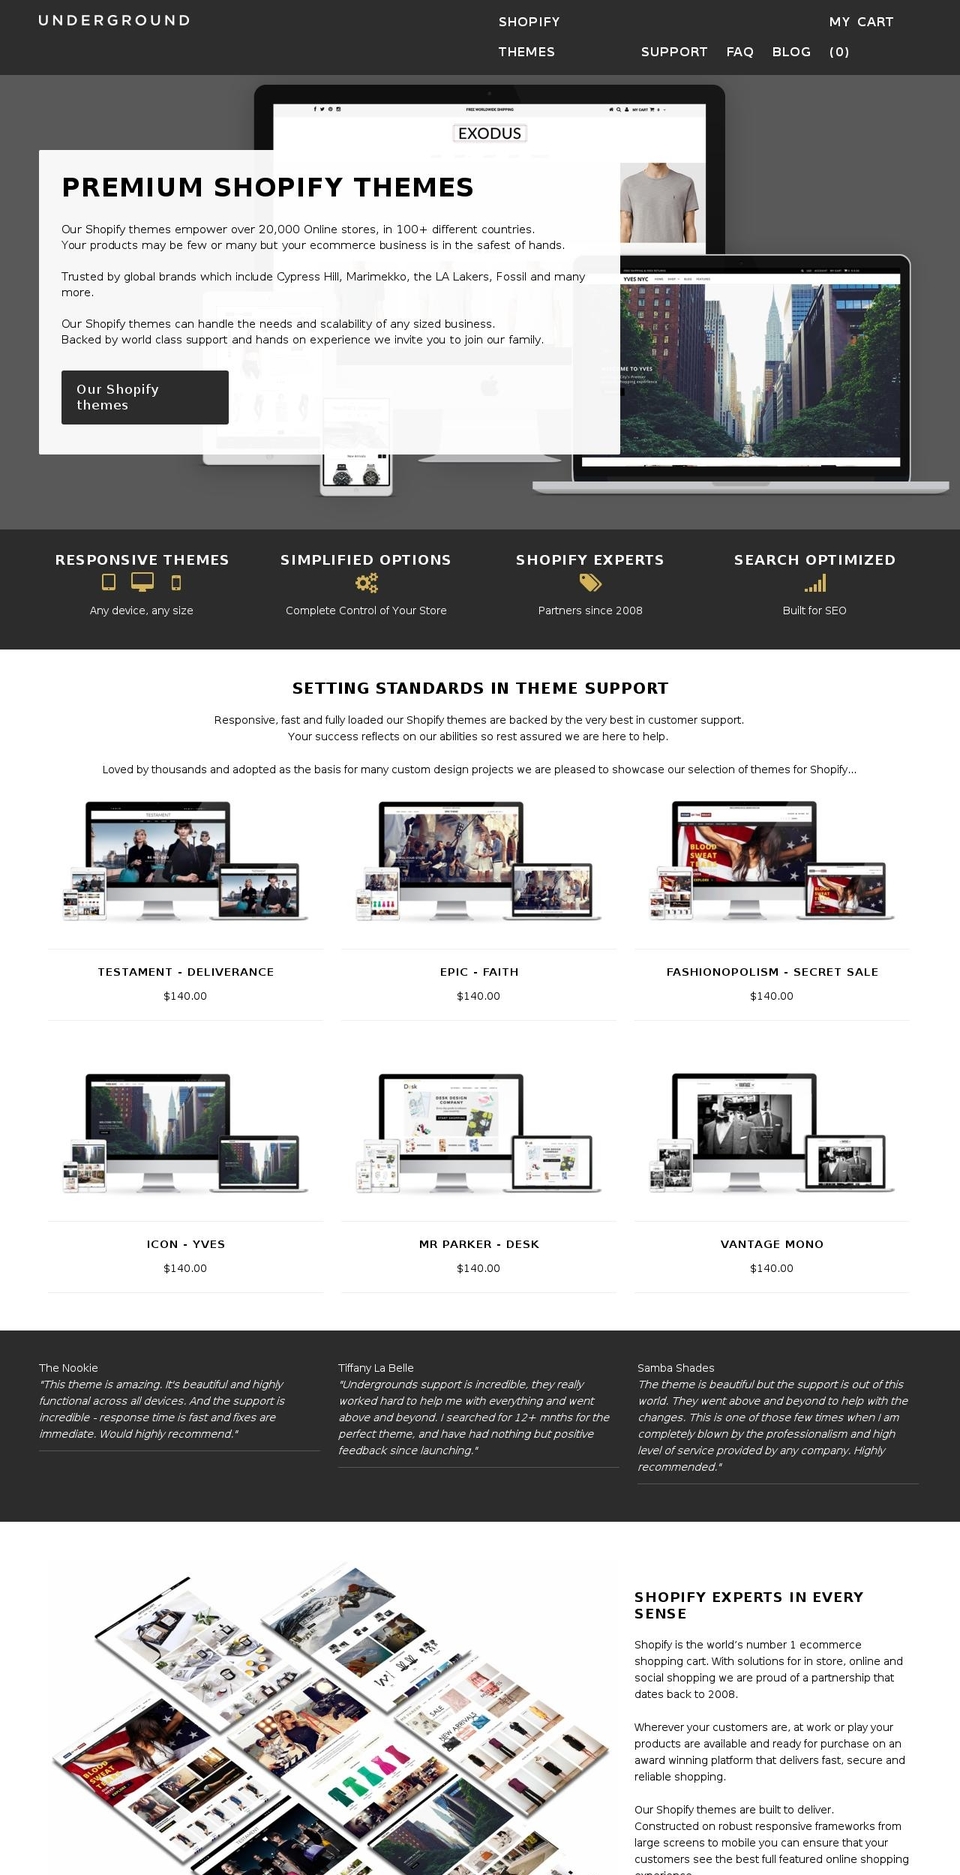 weareunderground.com shopify website screenshot